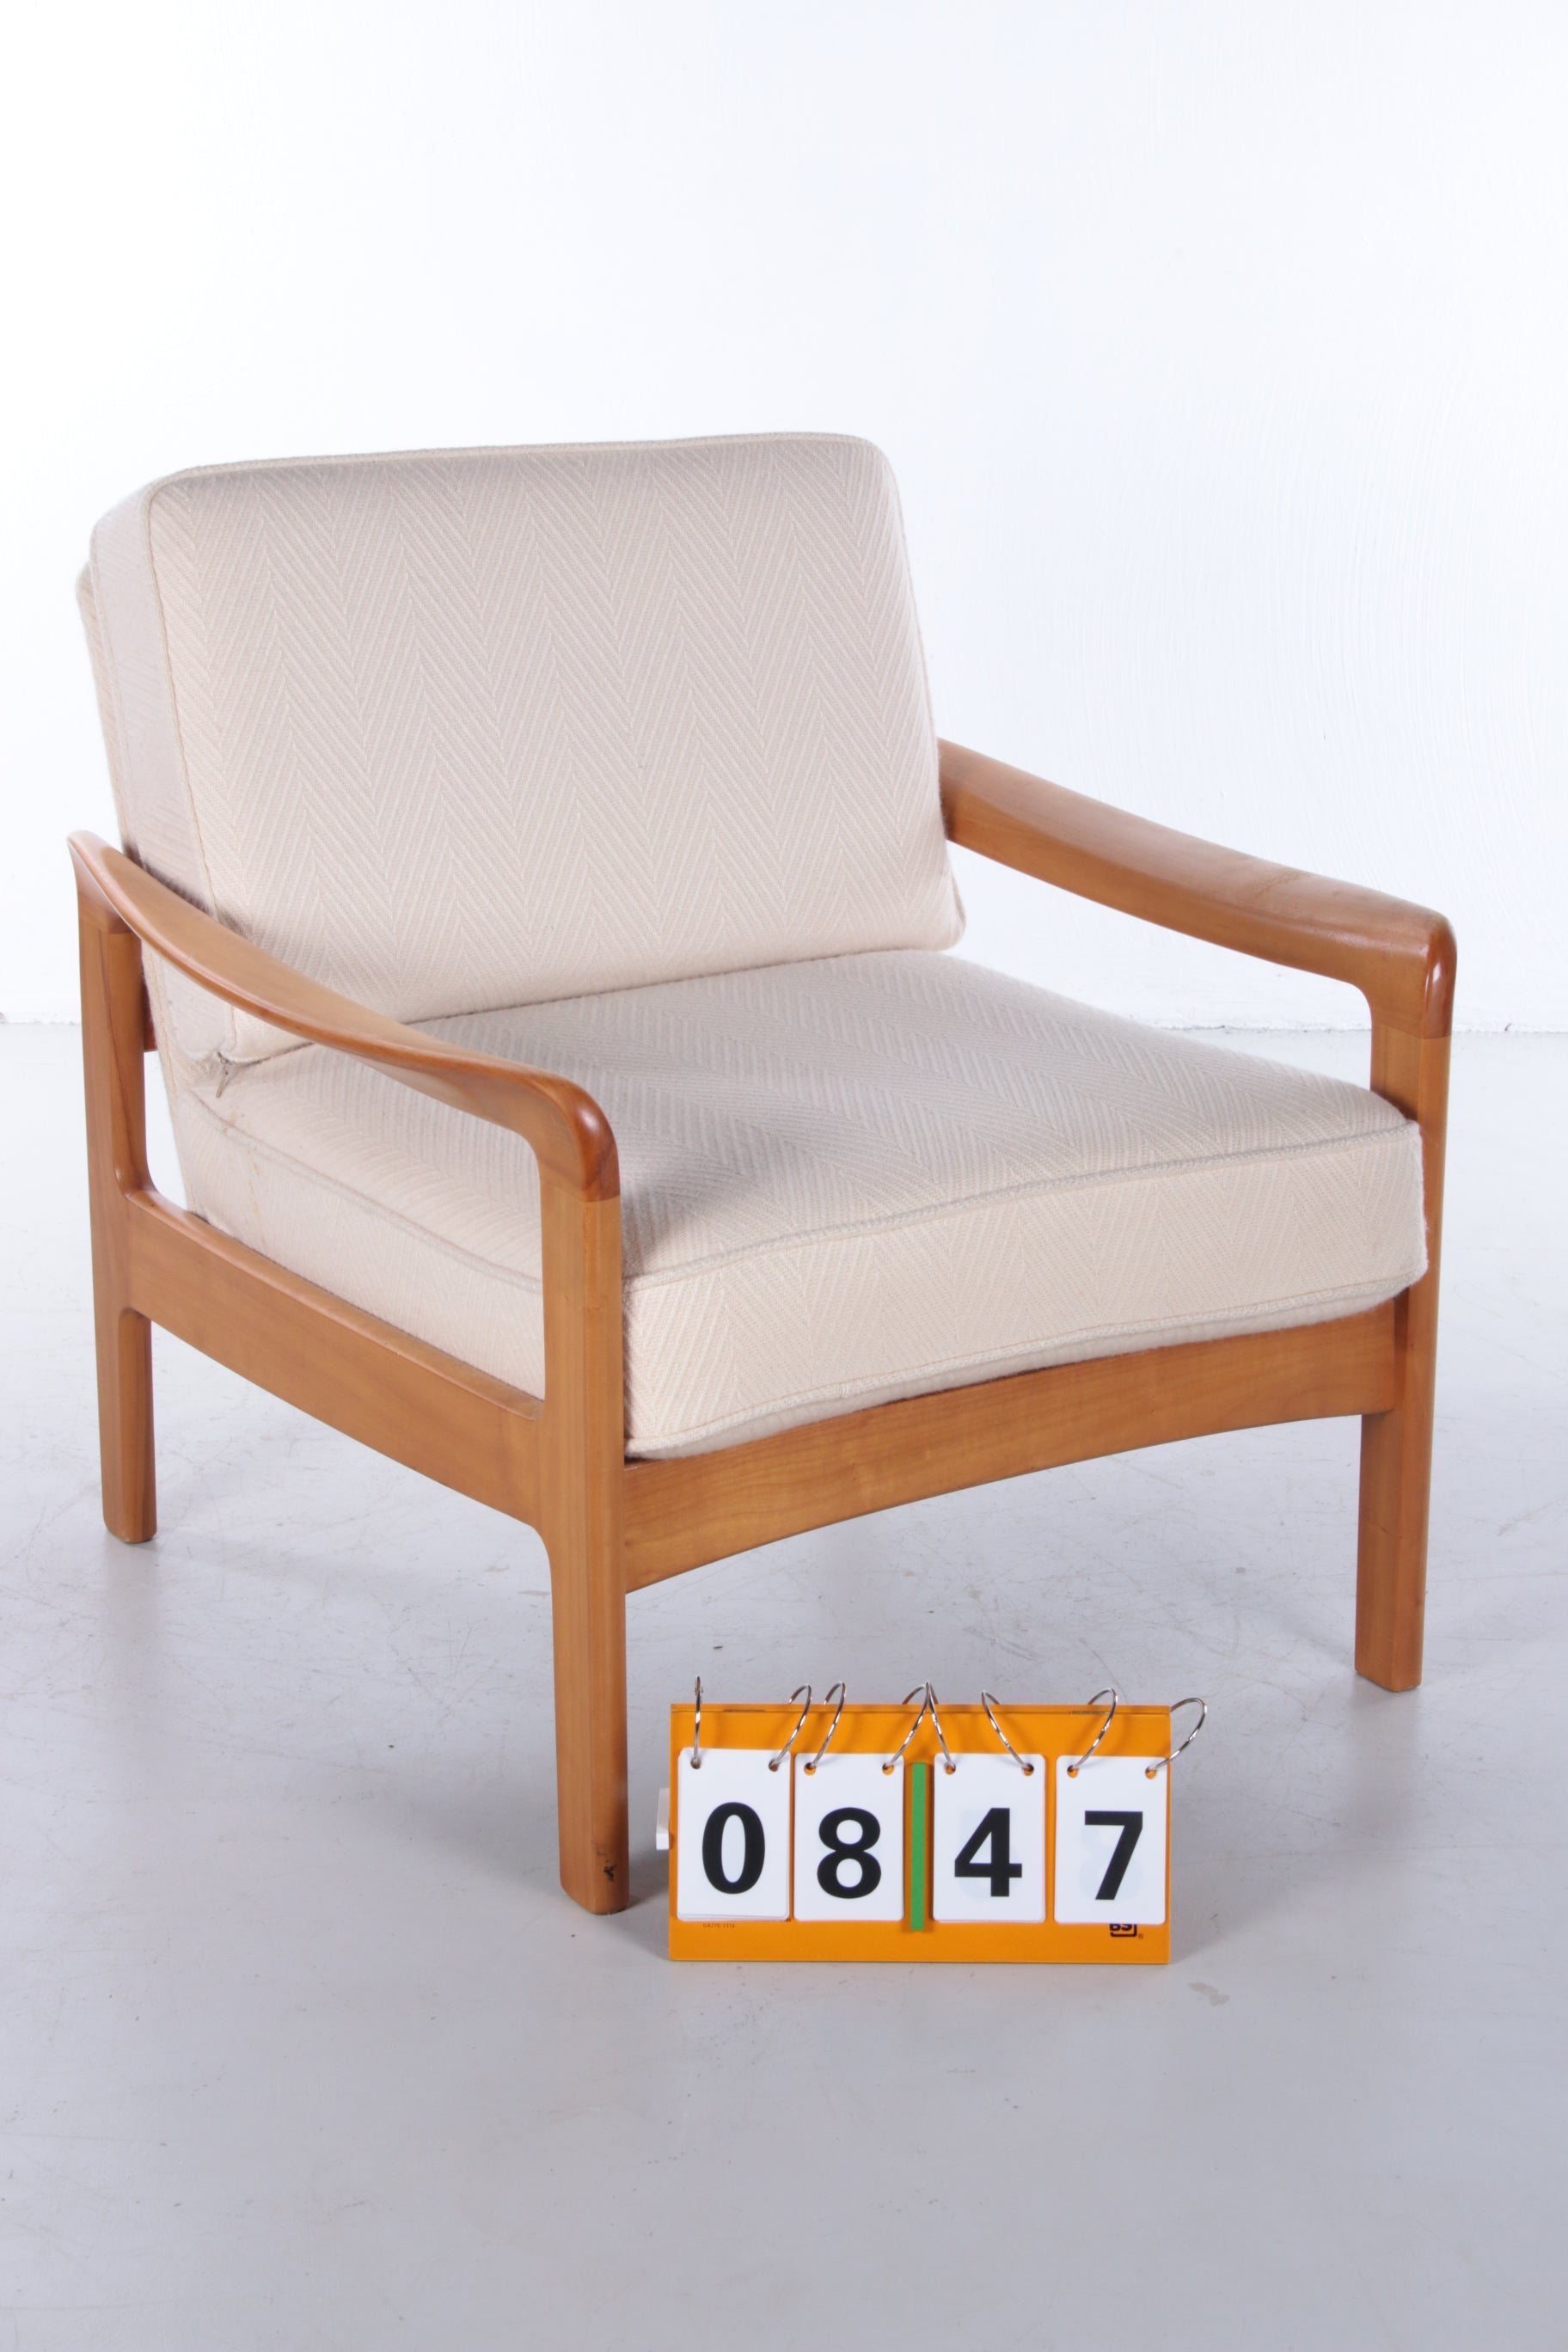 Deens Design teak fauteuil van Ole Wanscher,1960